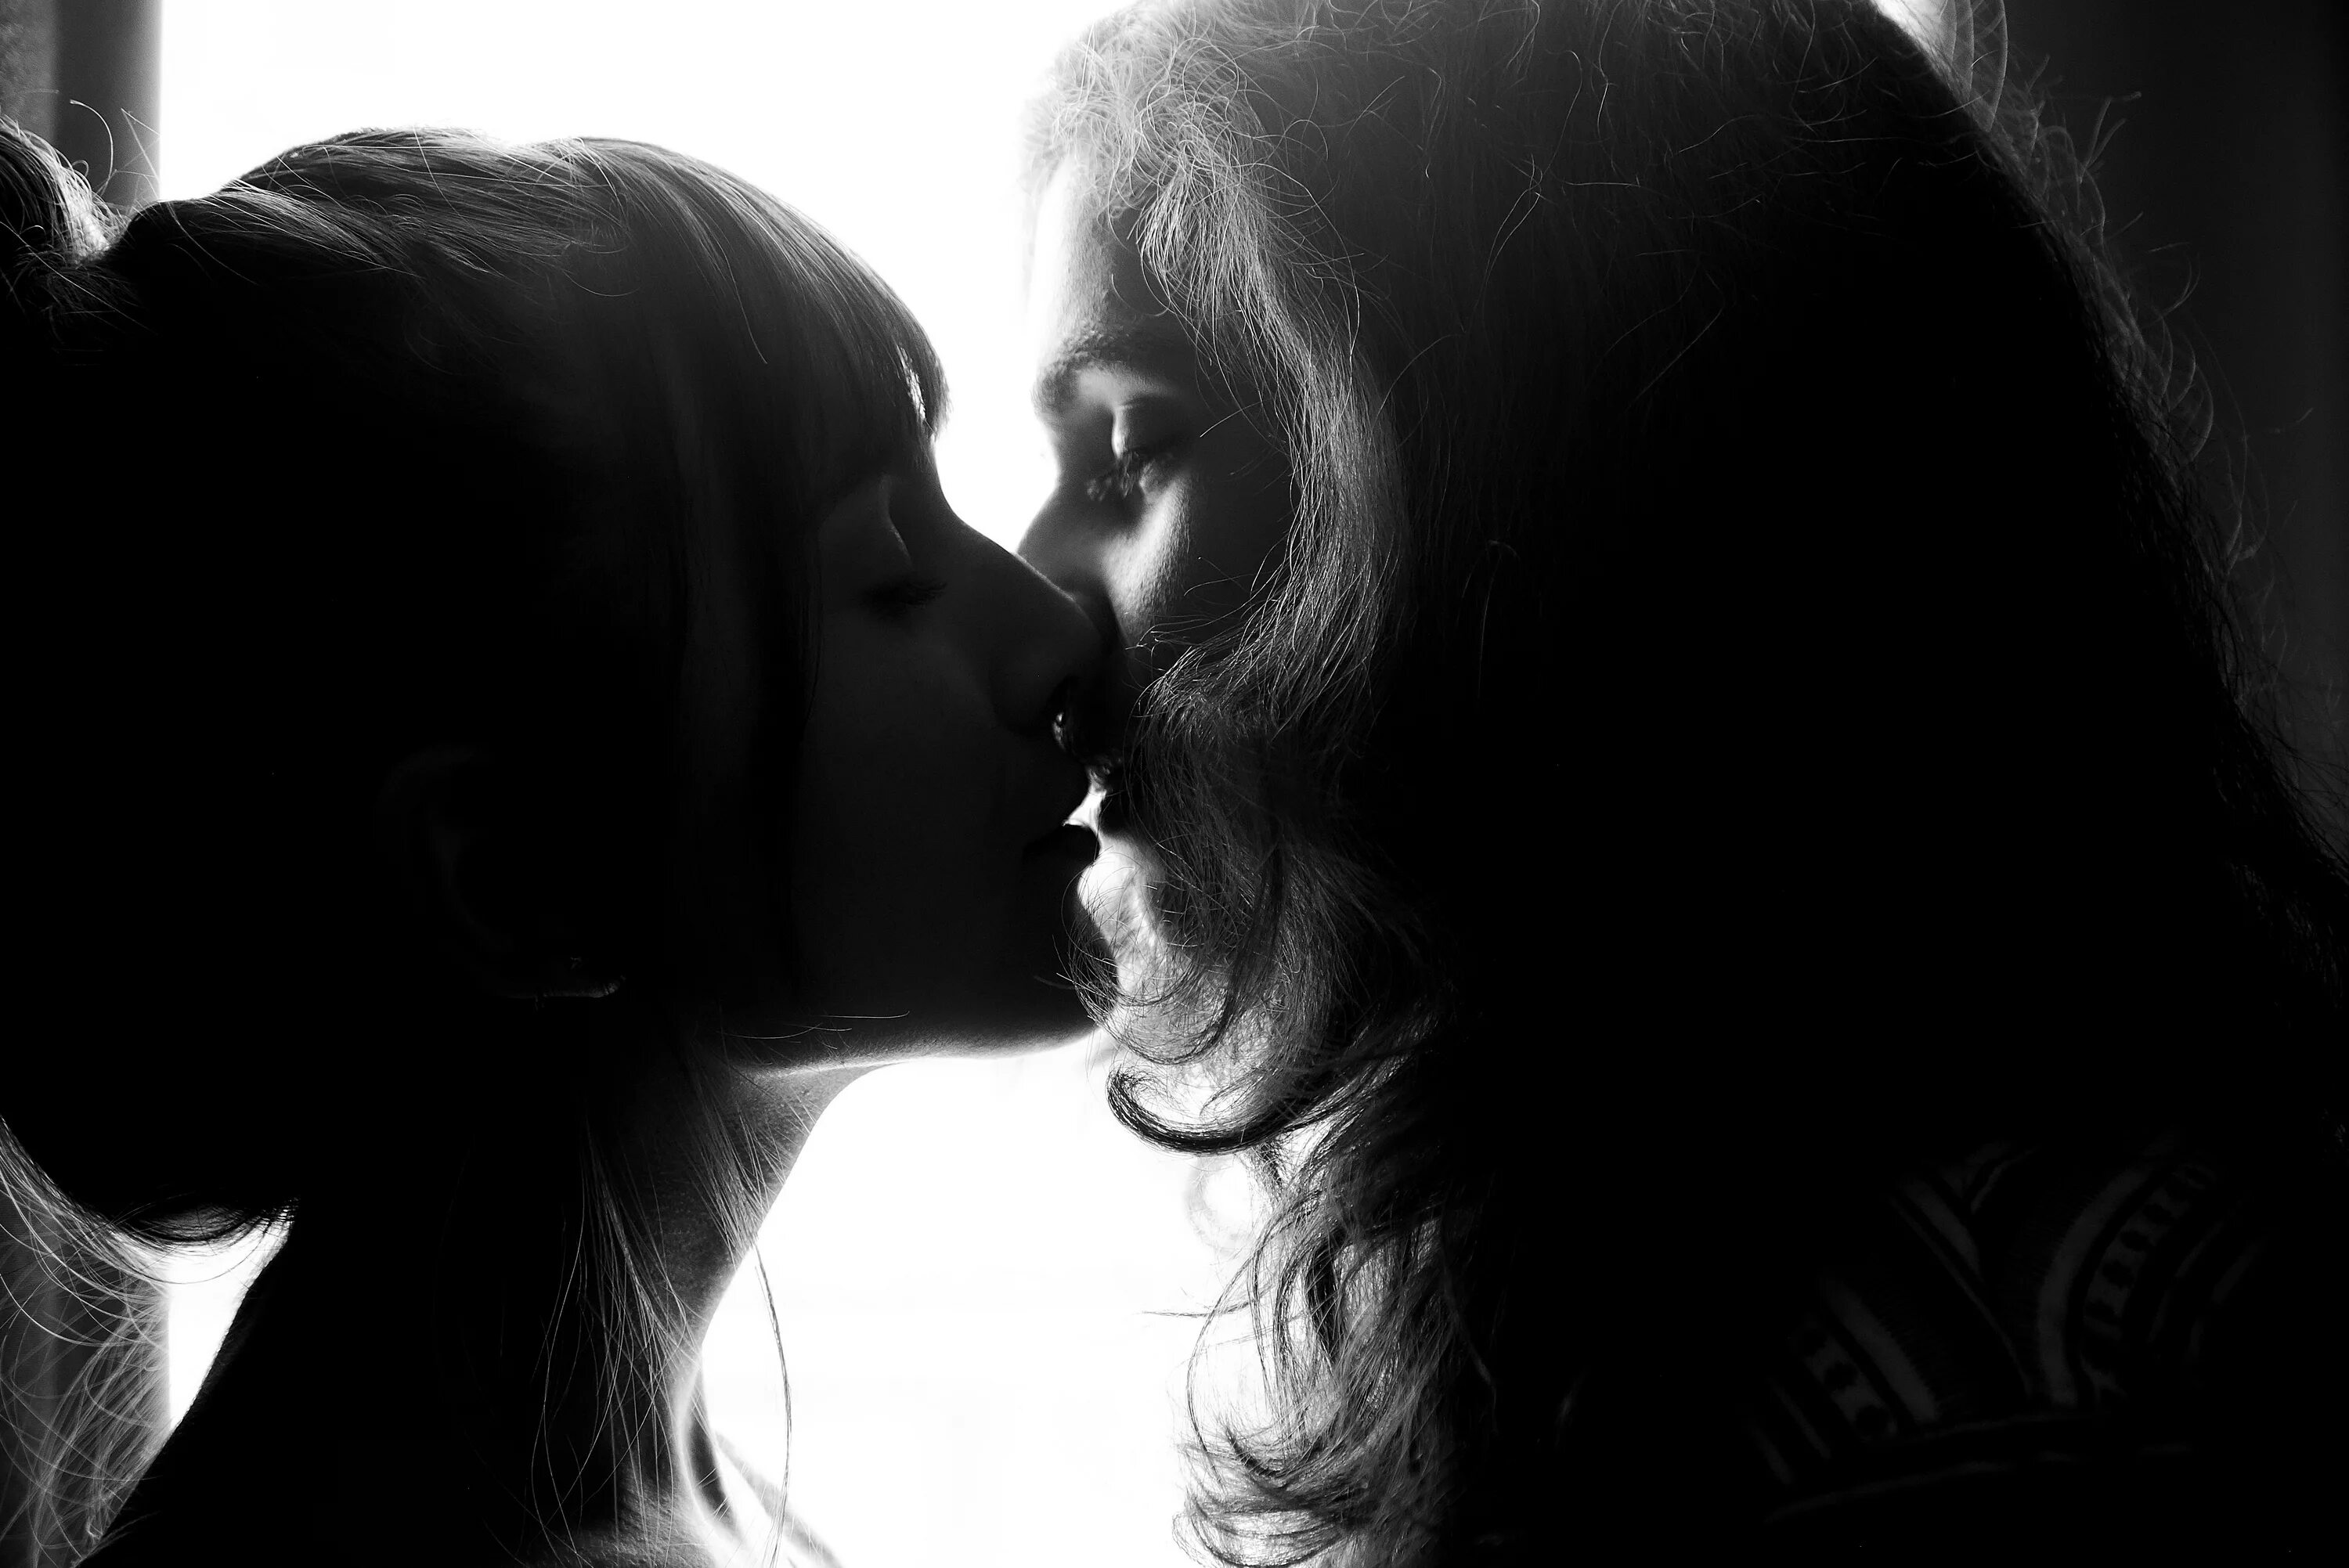 Lesbi facing. Две девушки любовь. Поцелуй девушек. Поцелуй двух девушек. Красивый поцелуй.